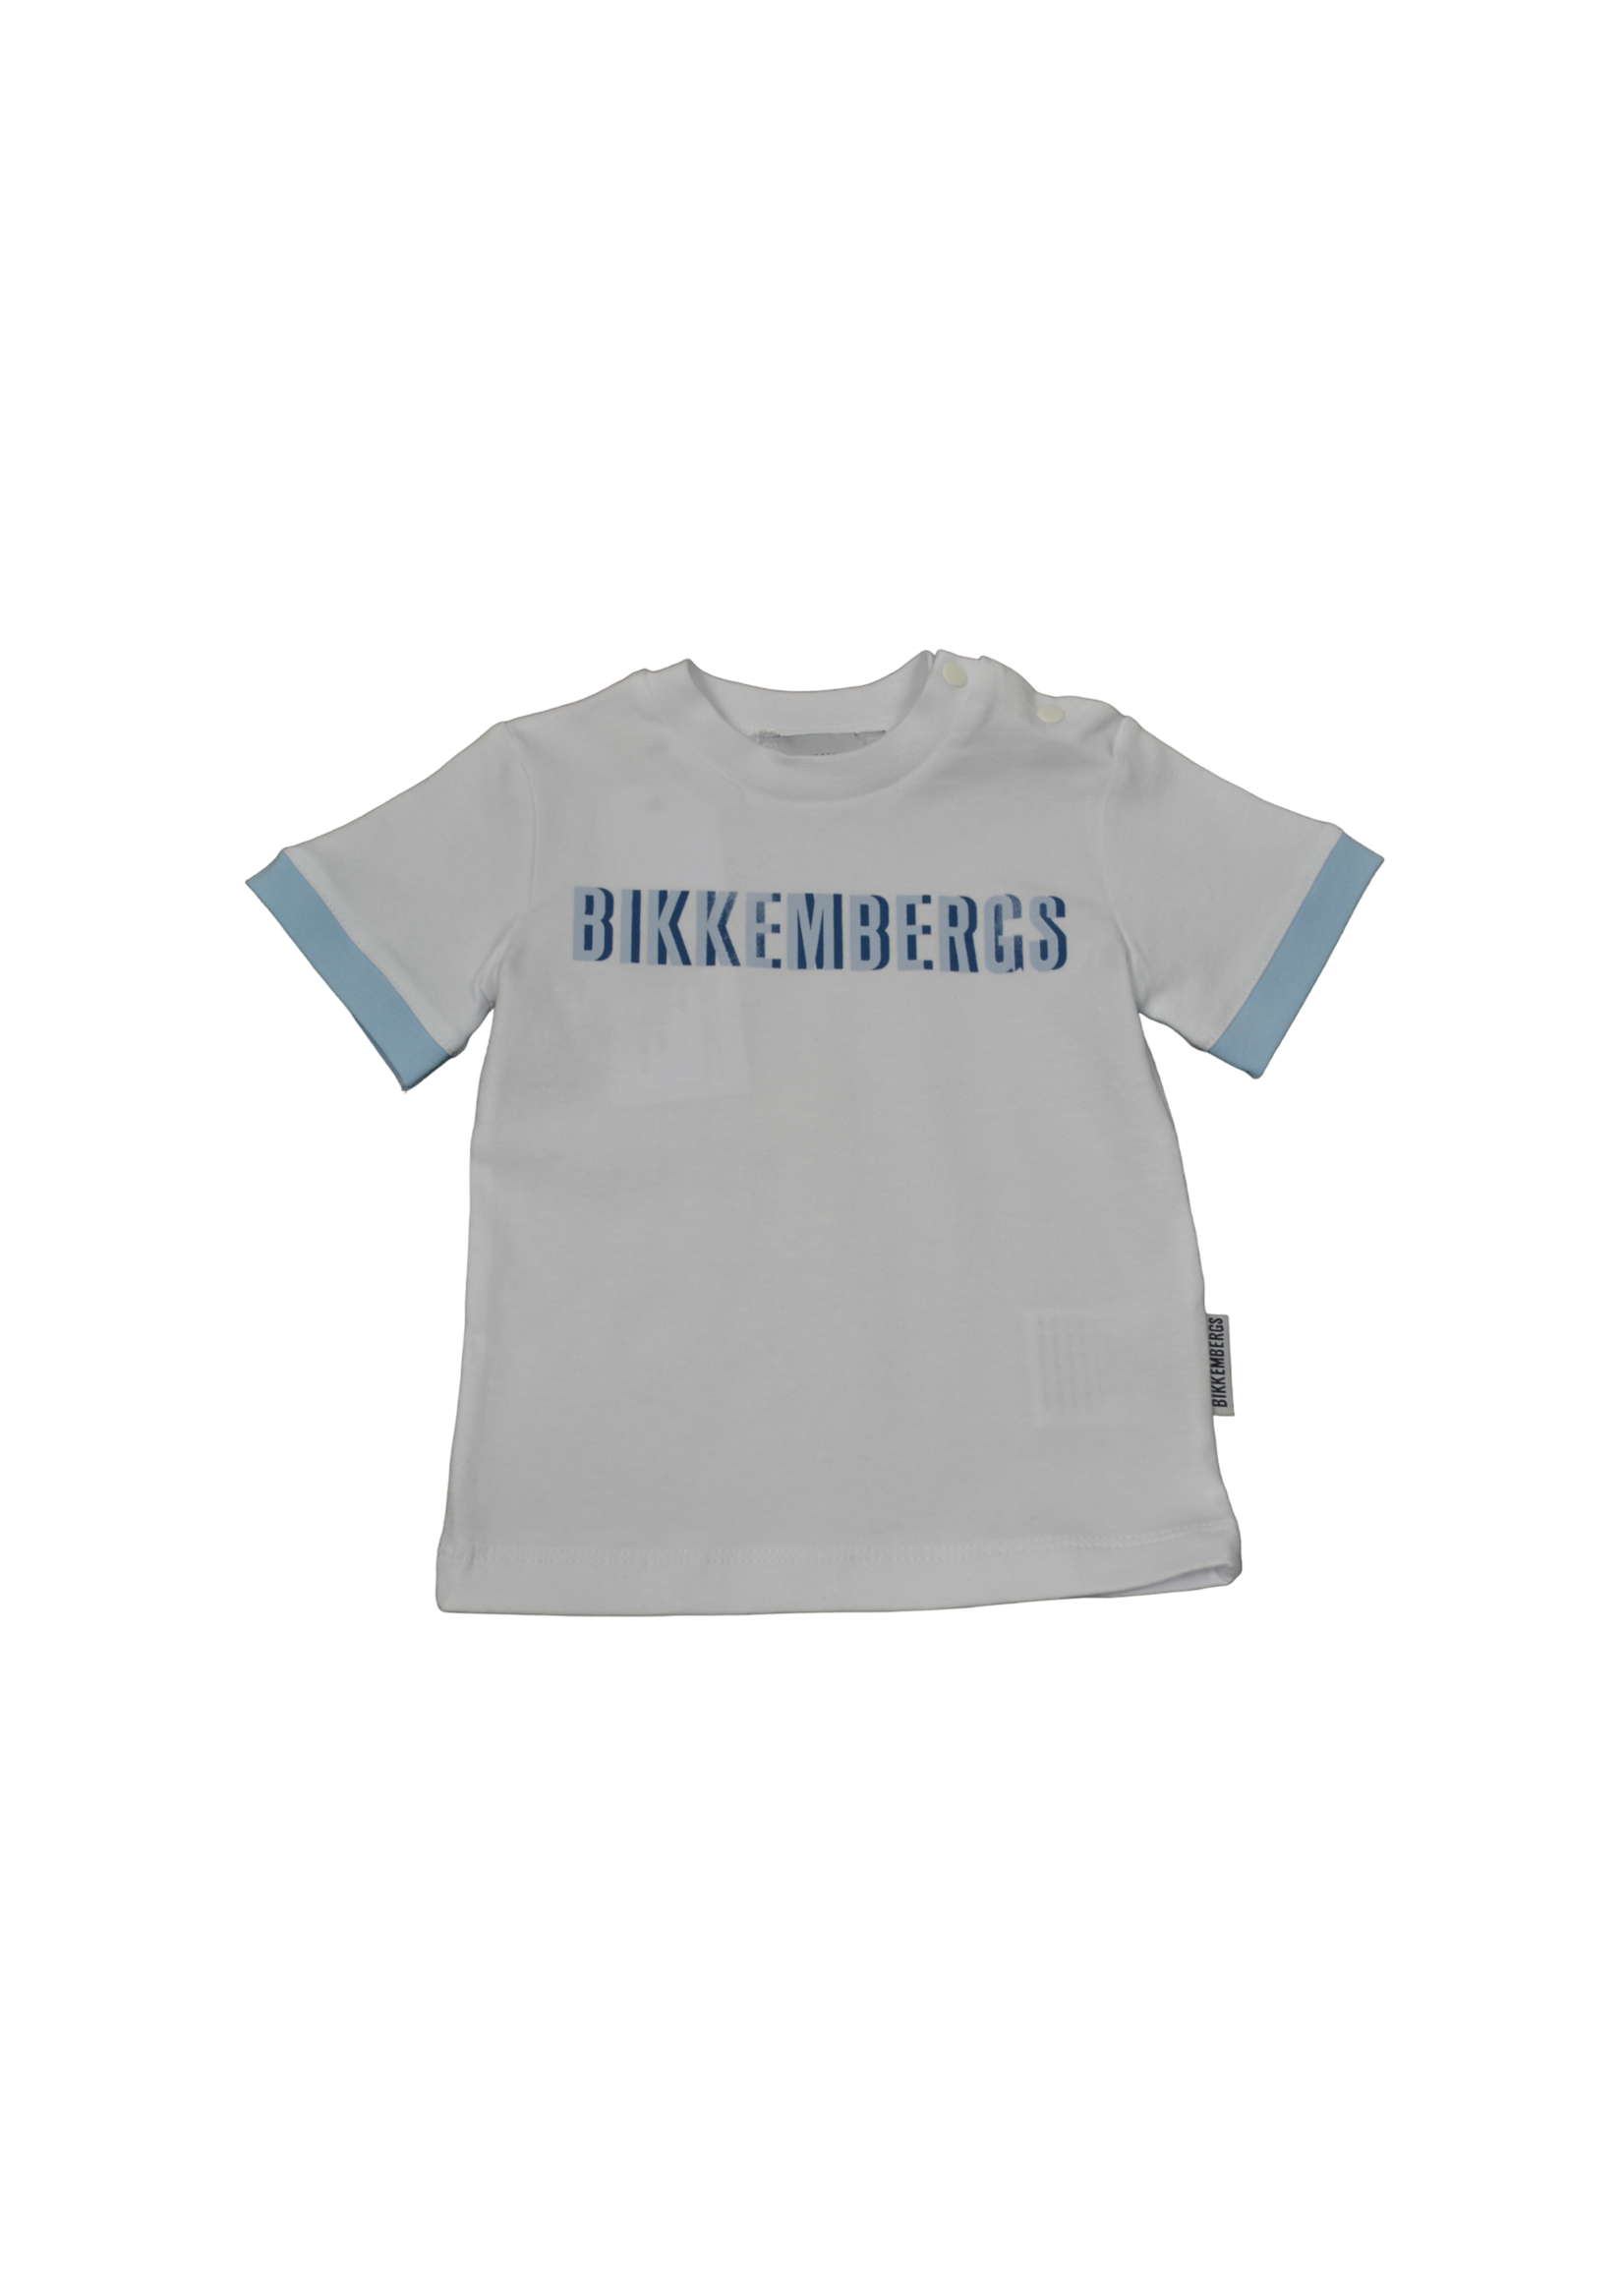 Bikkembergs Bikkembergs T-shirt wit/Lblauw